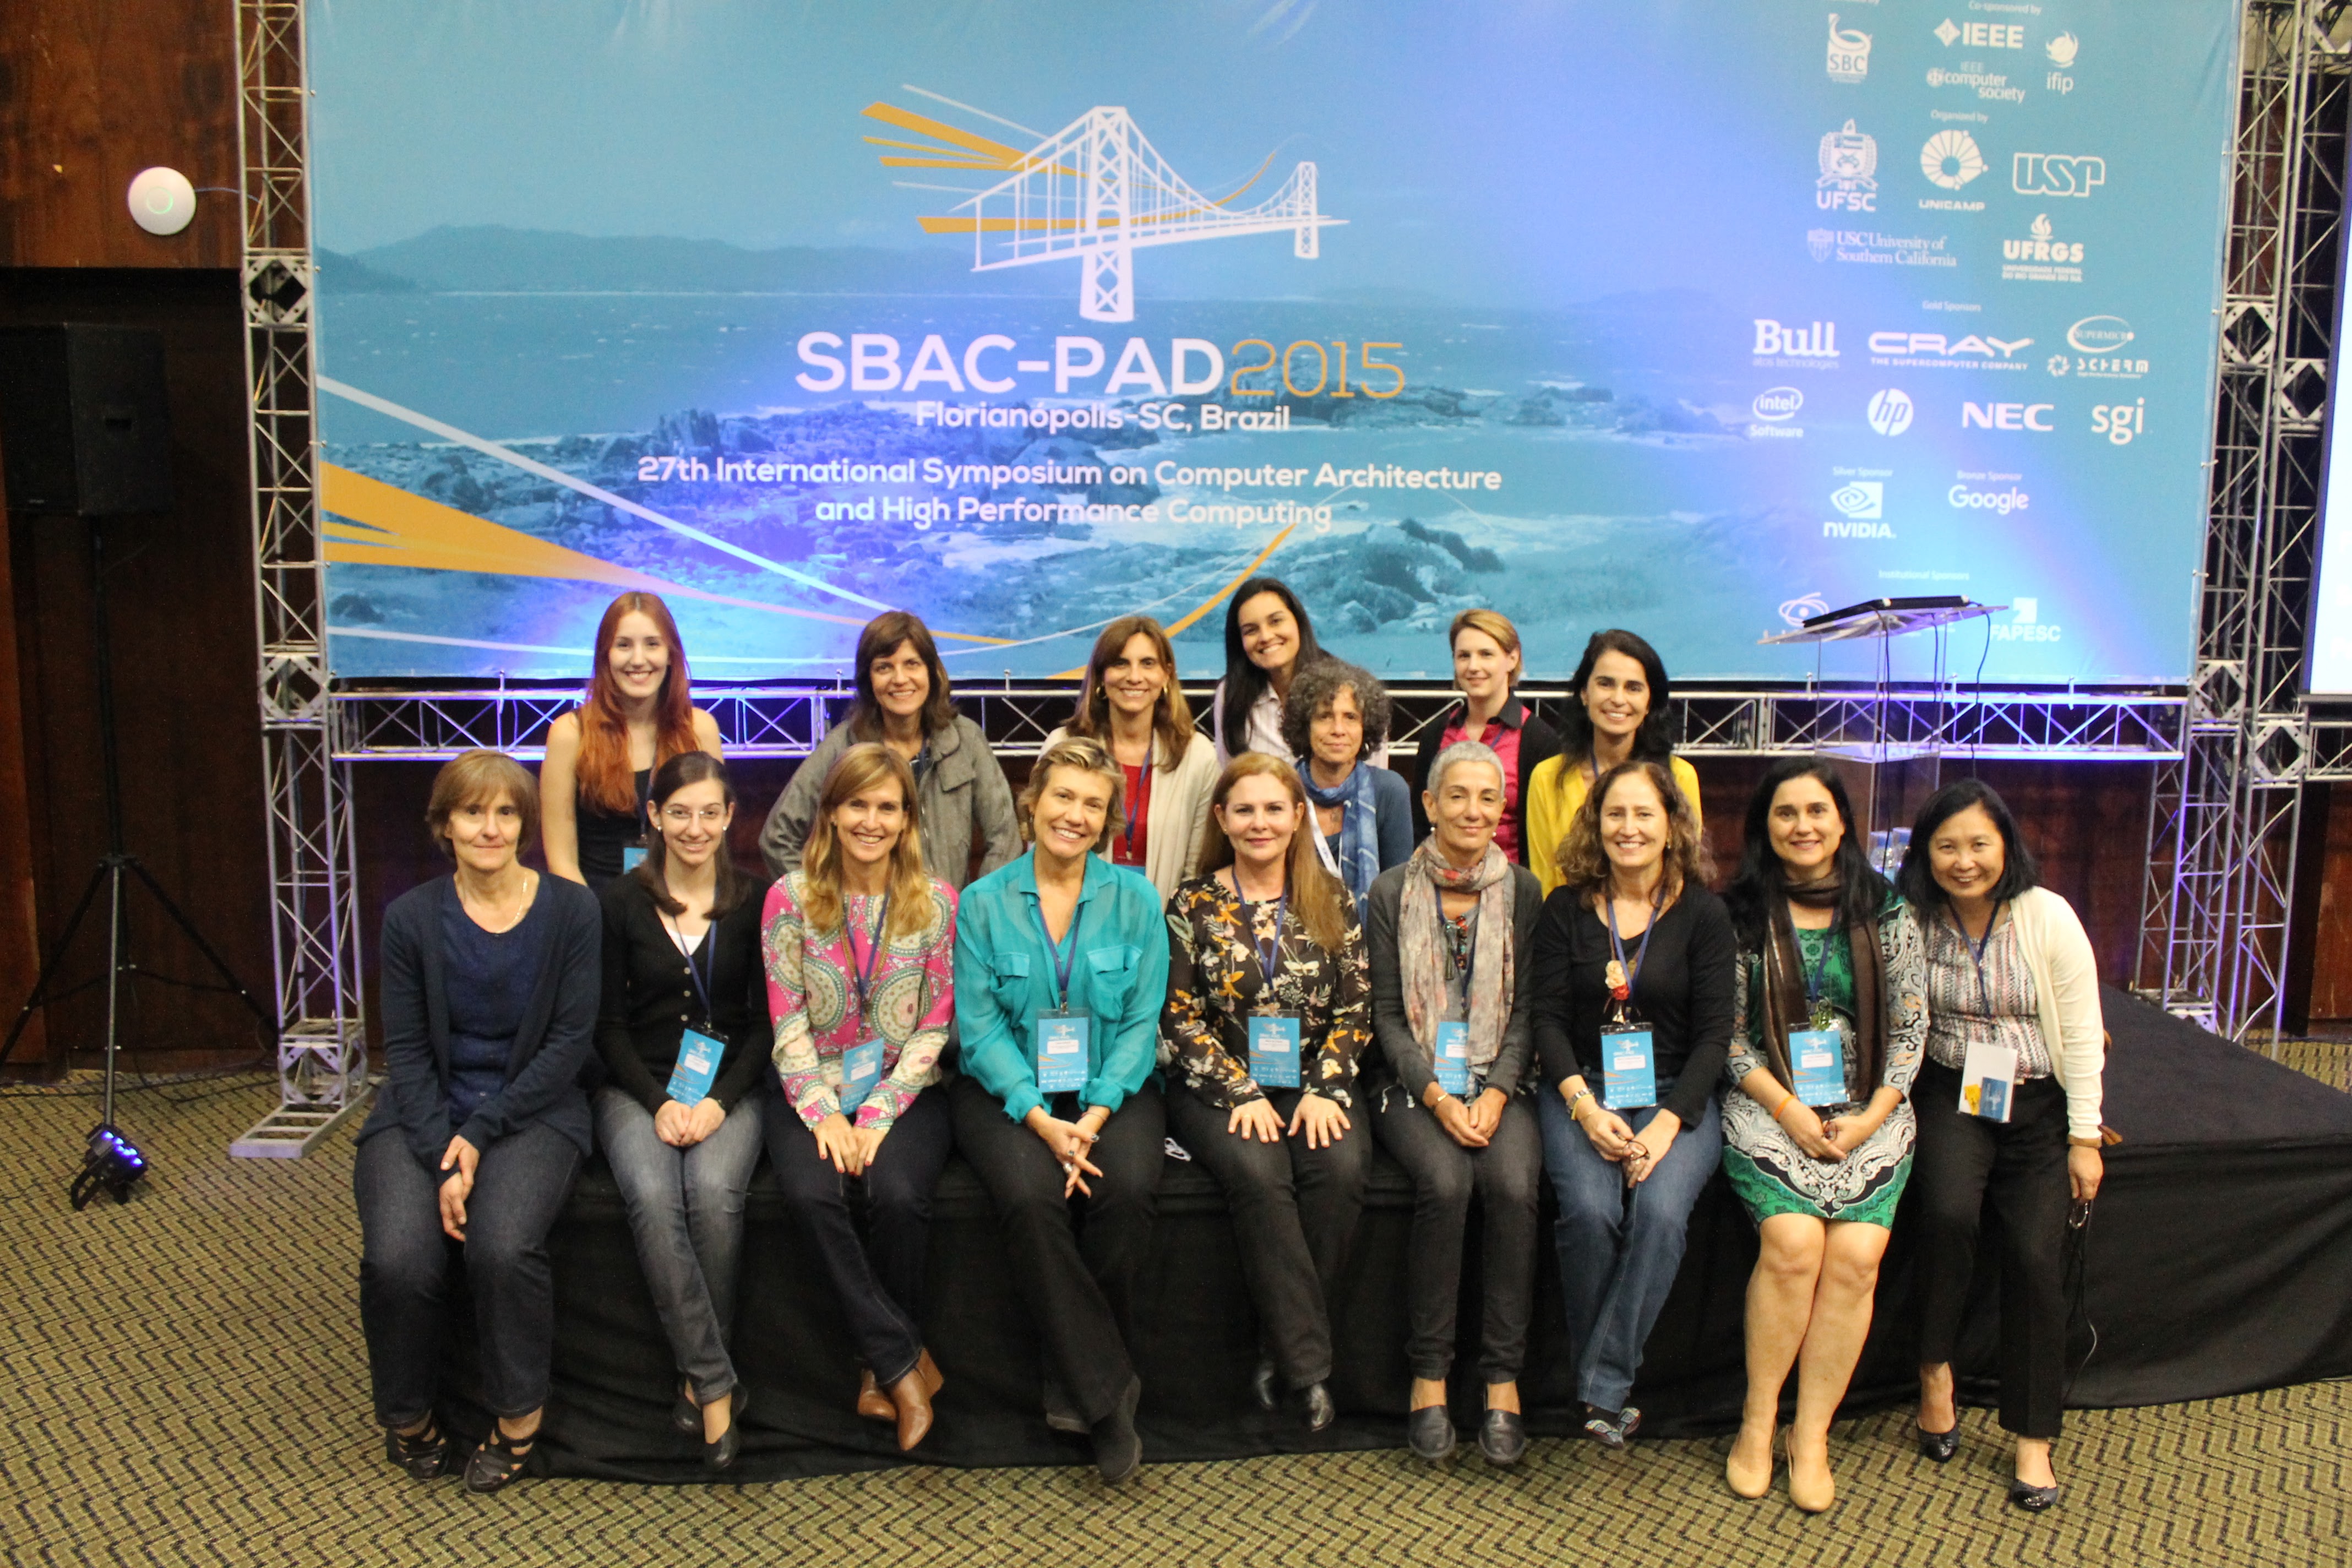 SBAC-PAD 2015 Women of High Performance Computing by Francieli Zanon Boito and Lucas Schnorr